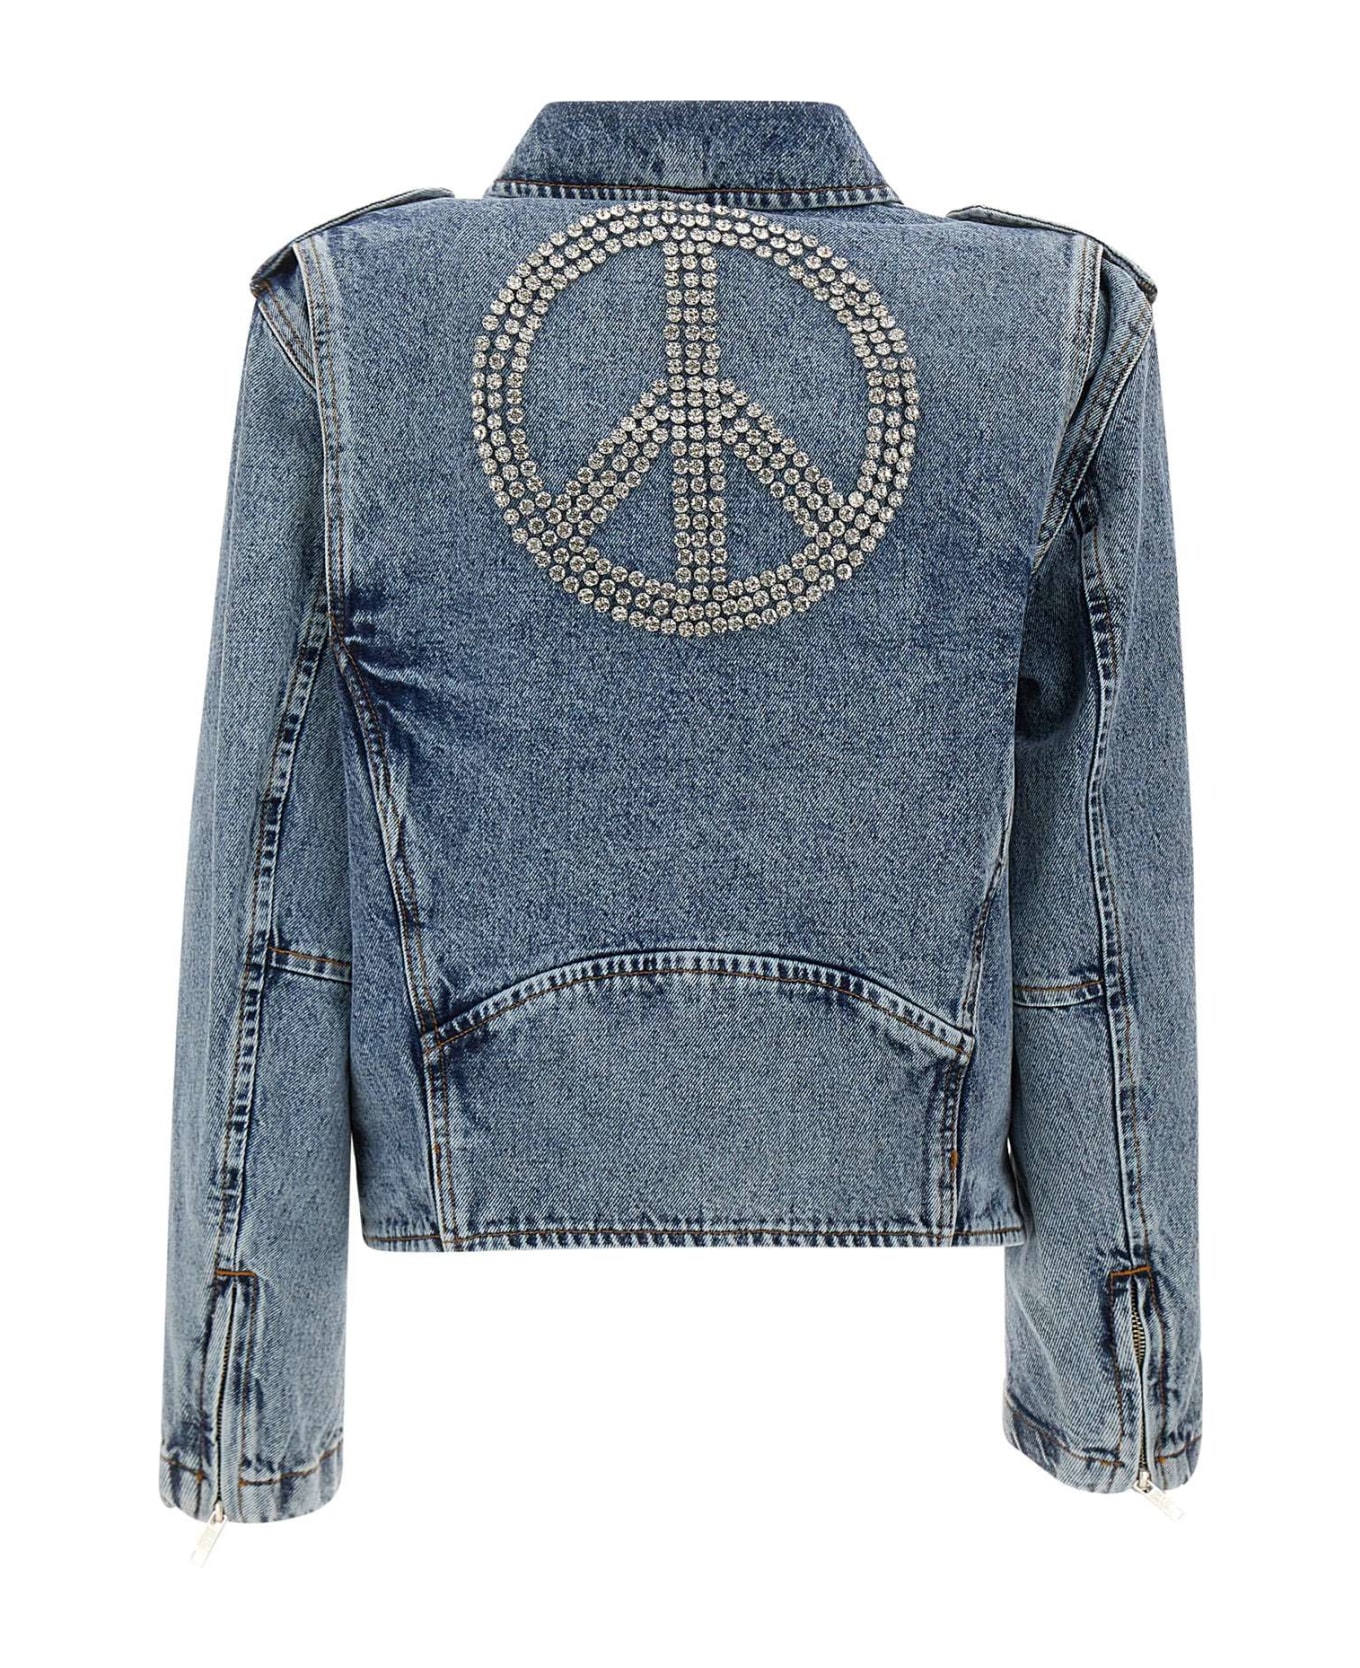 M05CH1N0 Jeans 'peace Symbol' Biker Jacket - BLUE